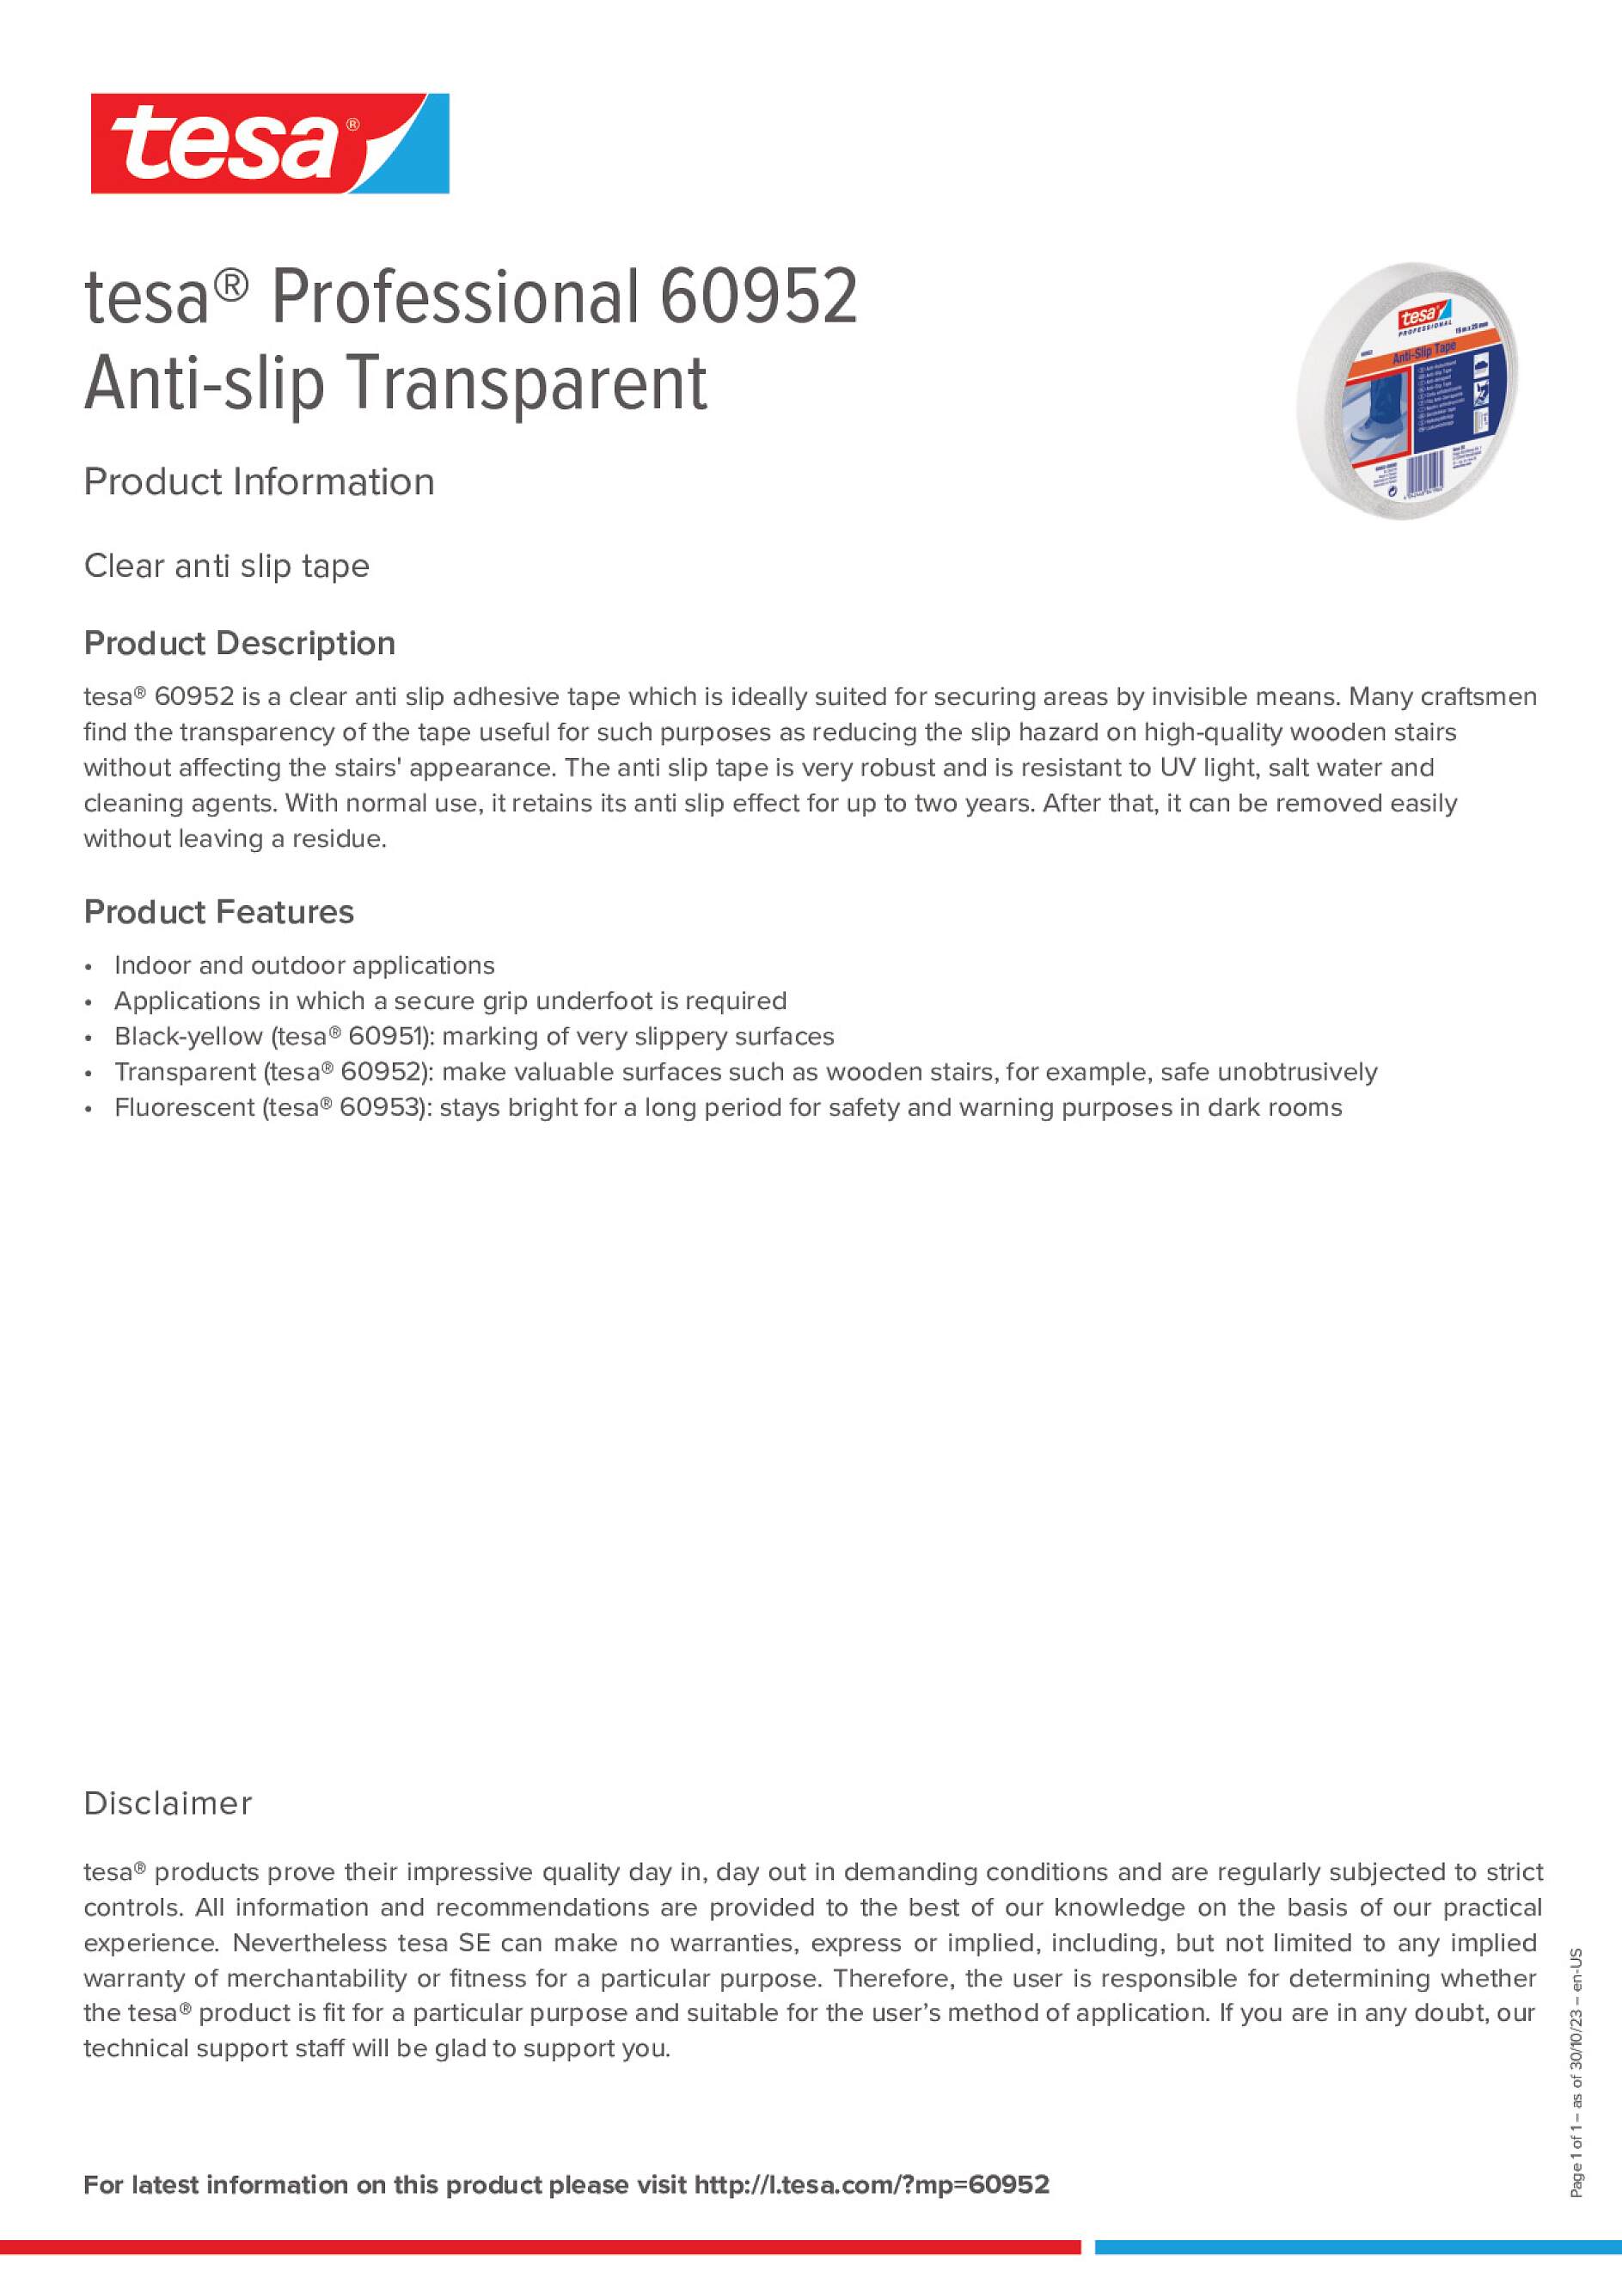 tesa® Professional 60952 Anti-Rutschband transparent - tesa